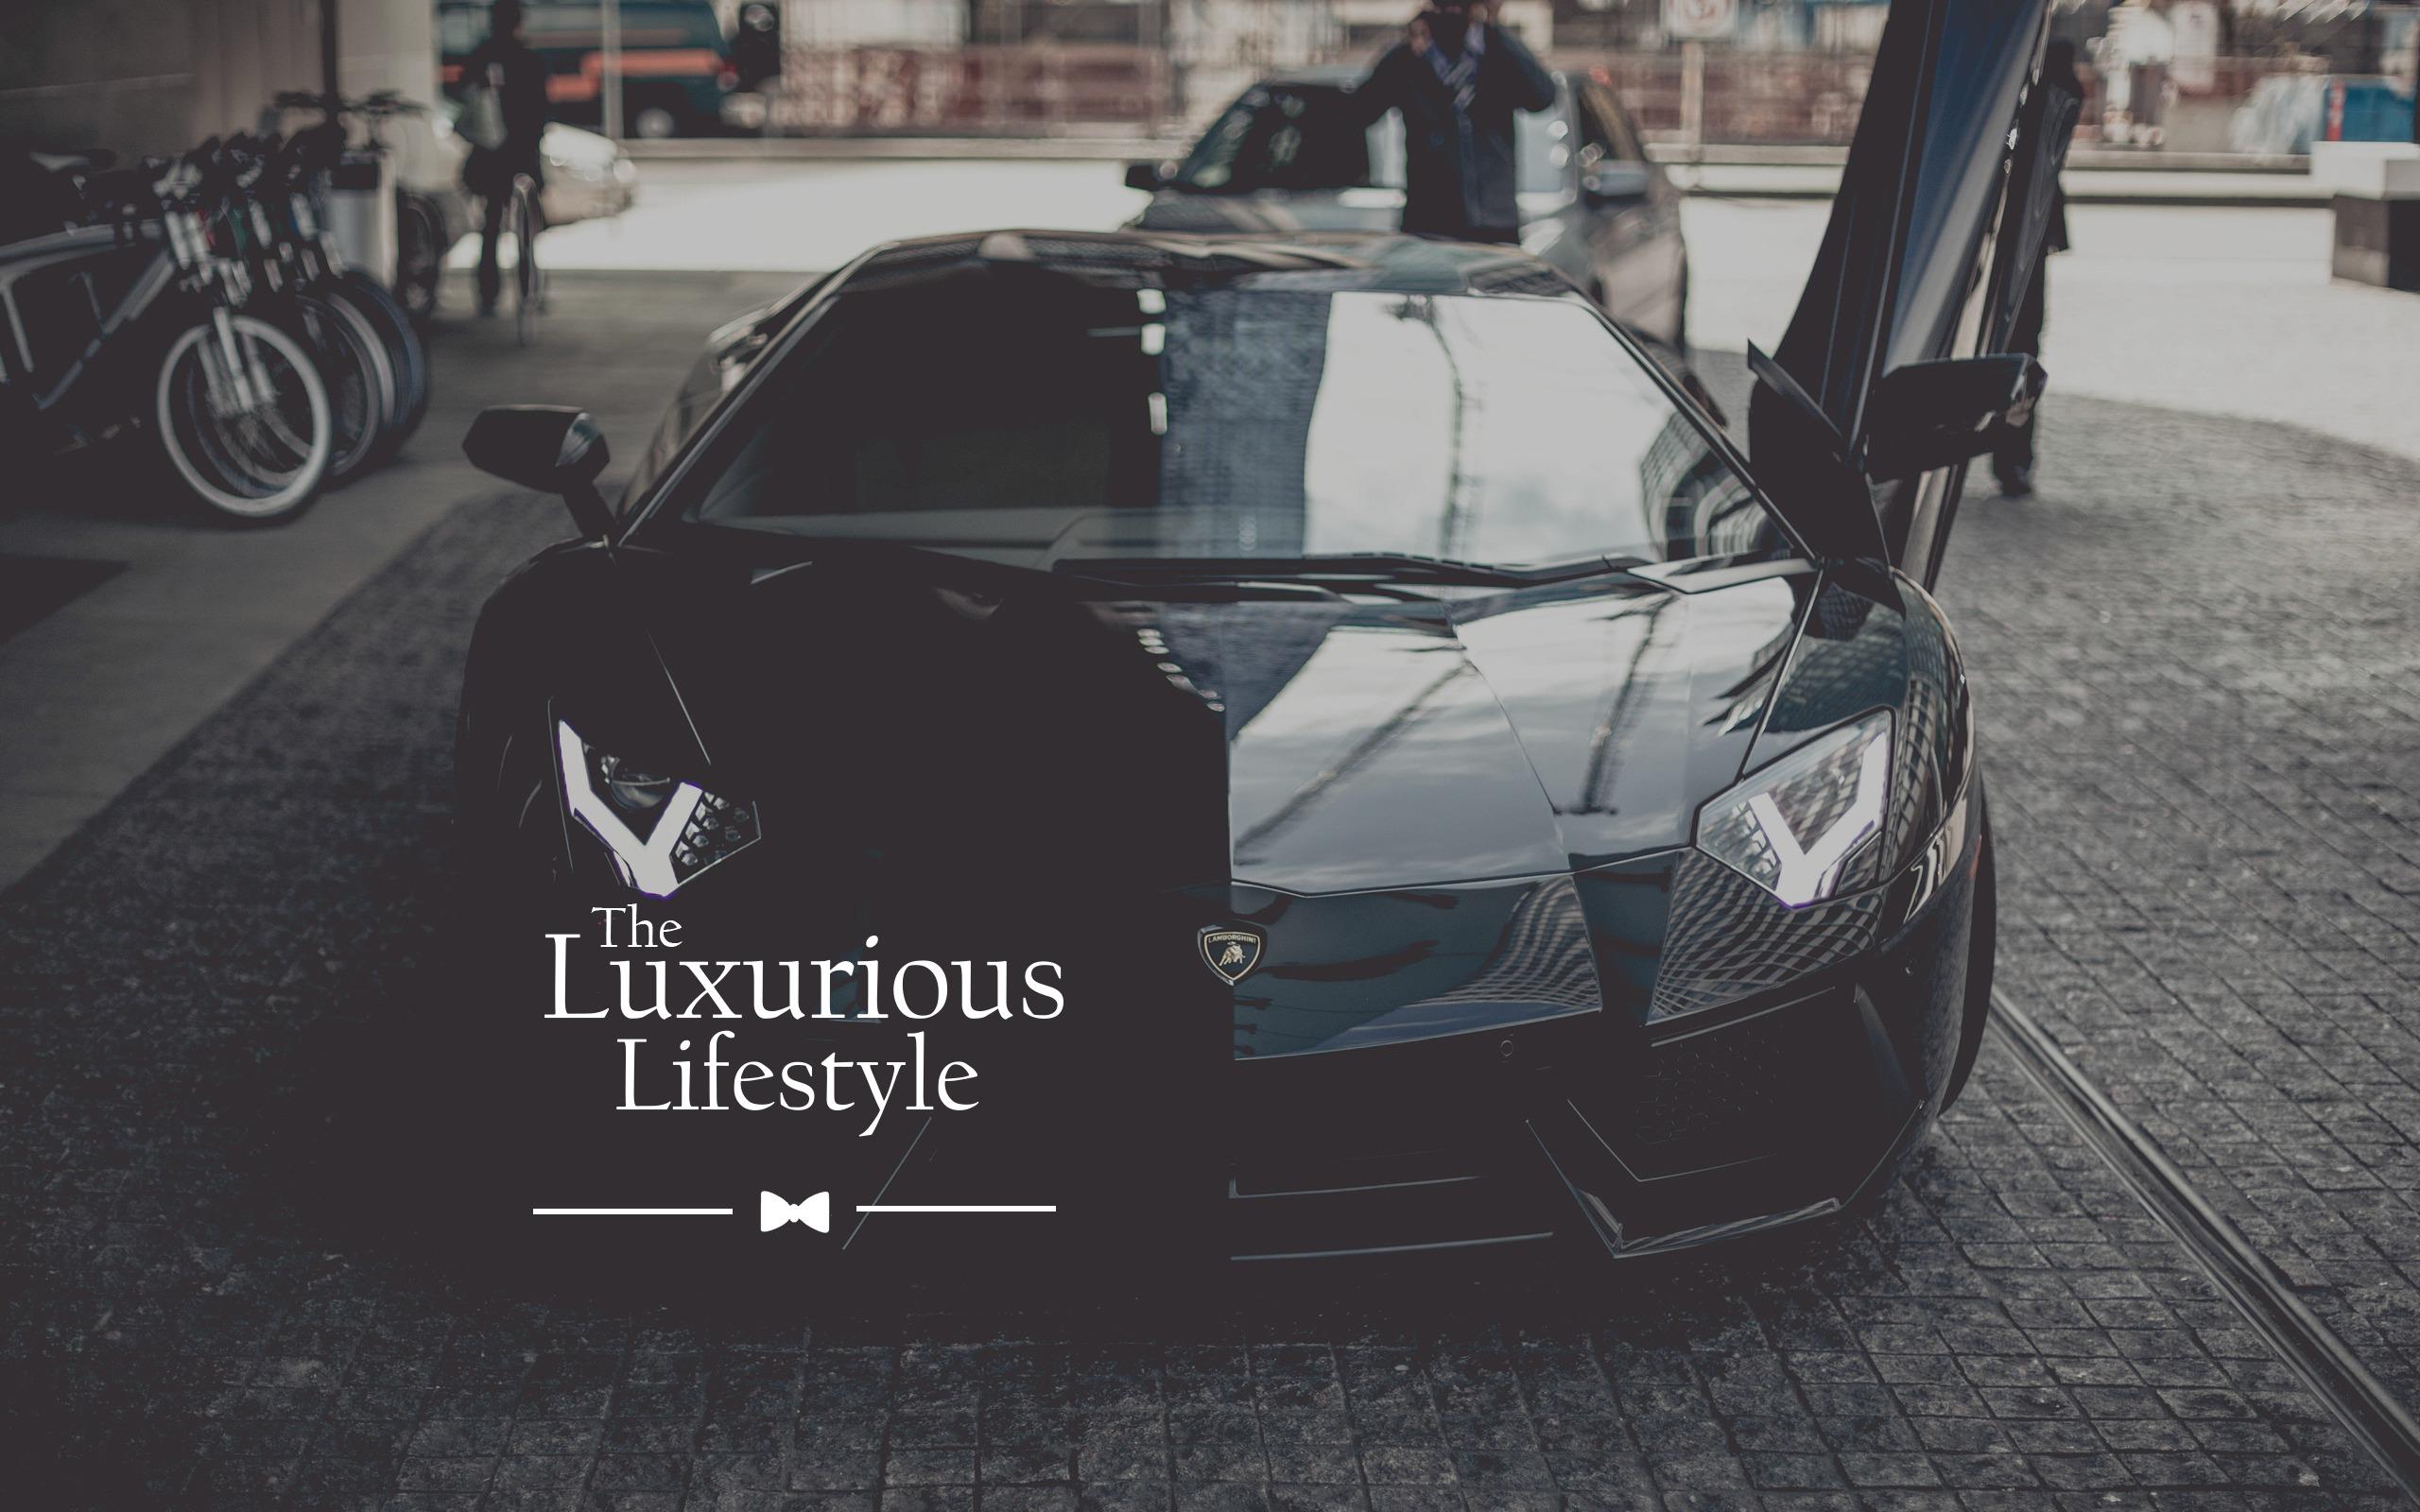 The Luxurious Lifestyle